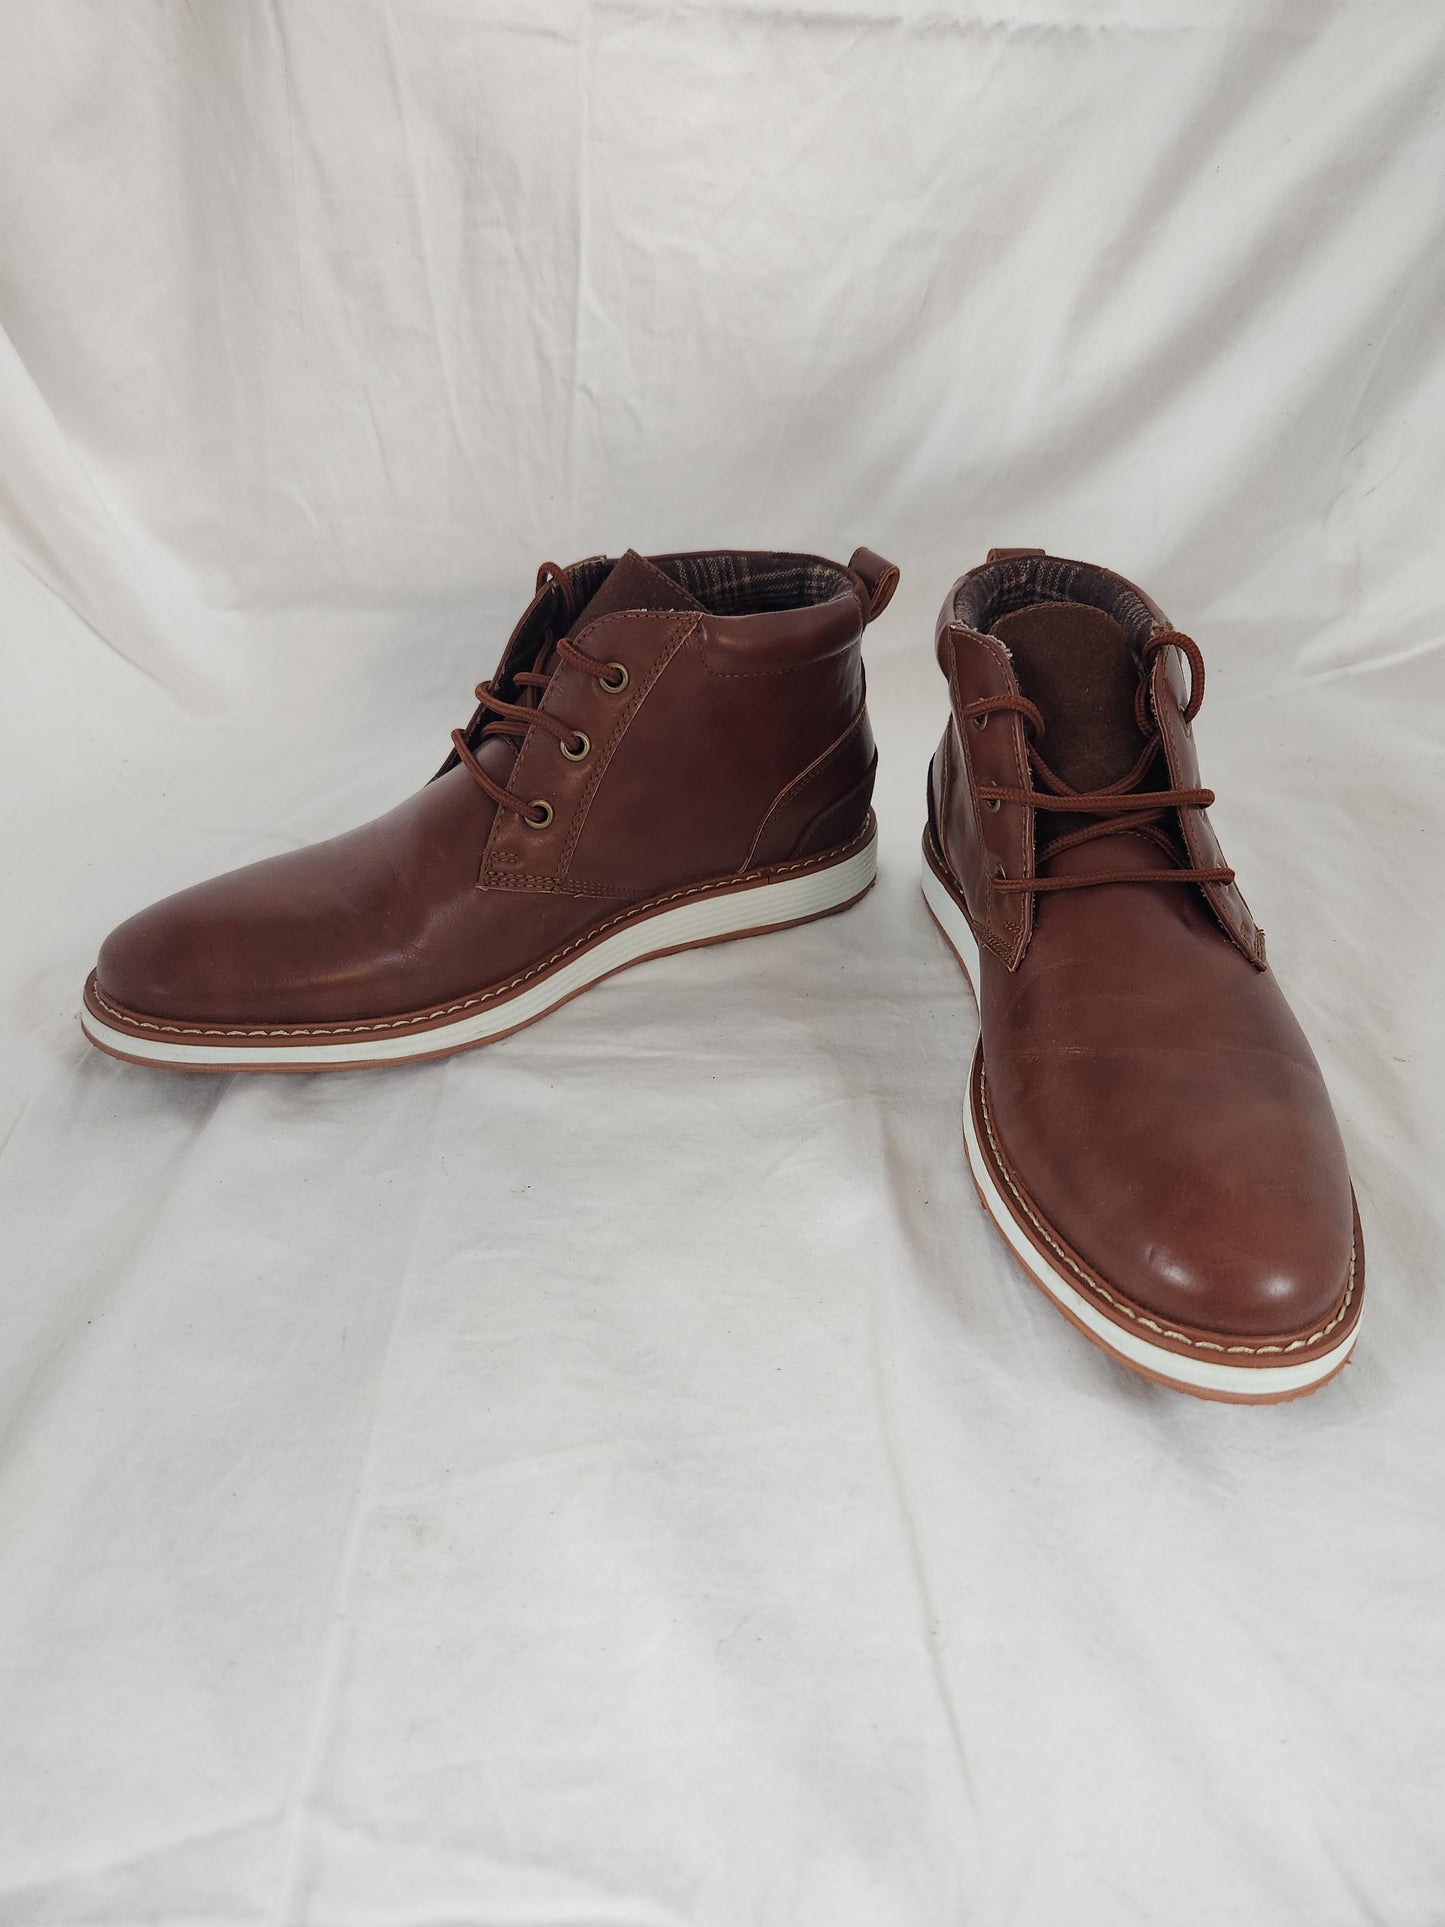 Ferro Aldo Houstan Brown Casual Mid-Top Shoes - Size: 8